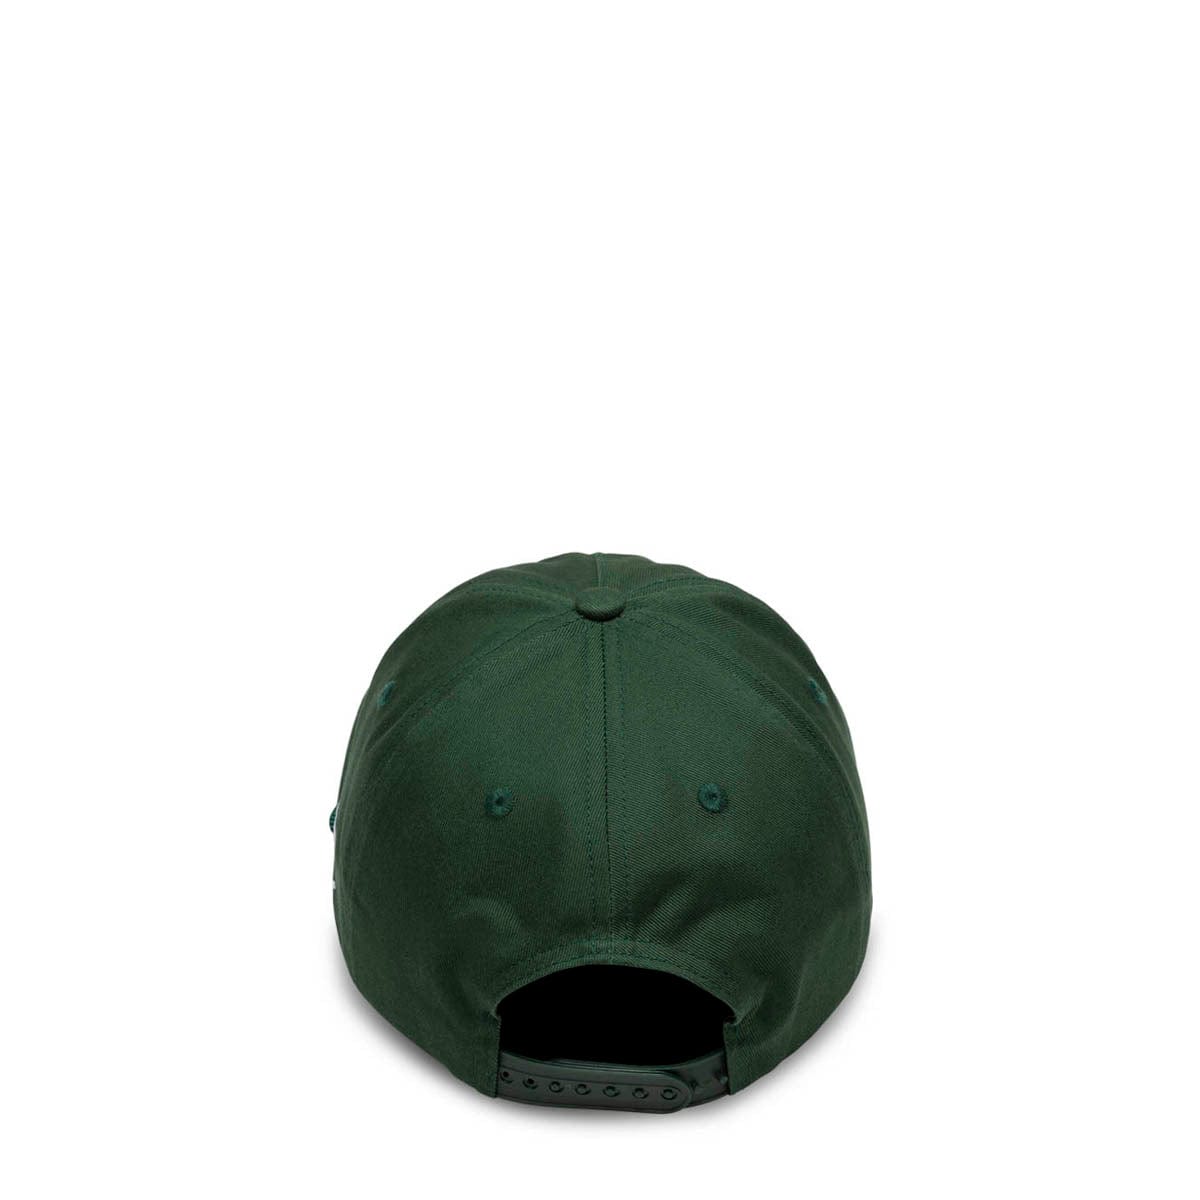 Malbon Golf Headwear FOREST / O/S STINGER ROPE HAT